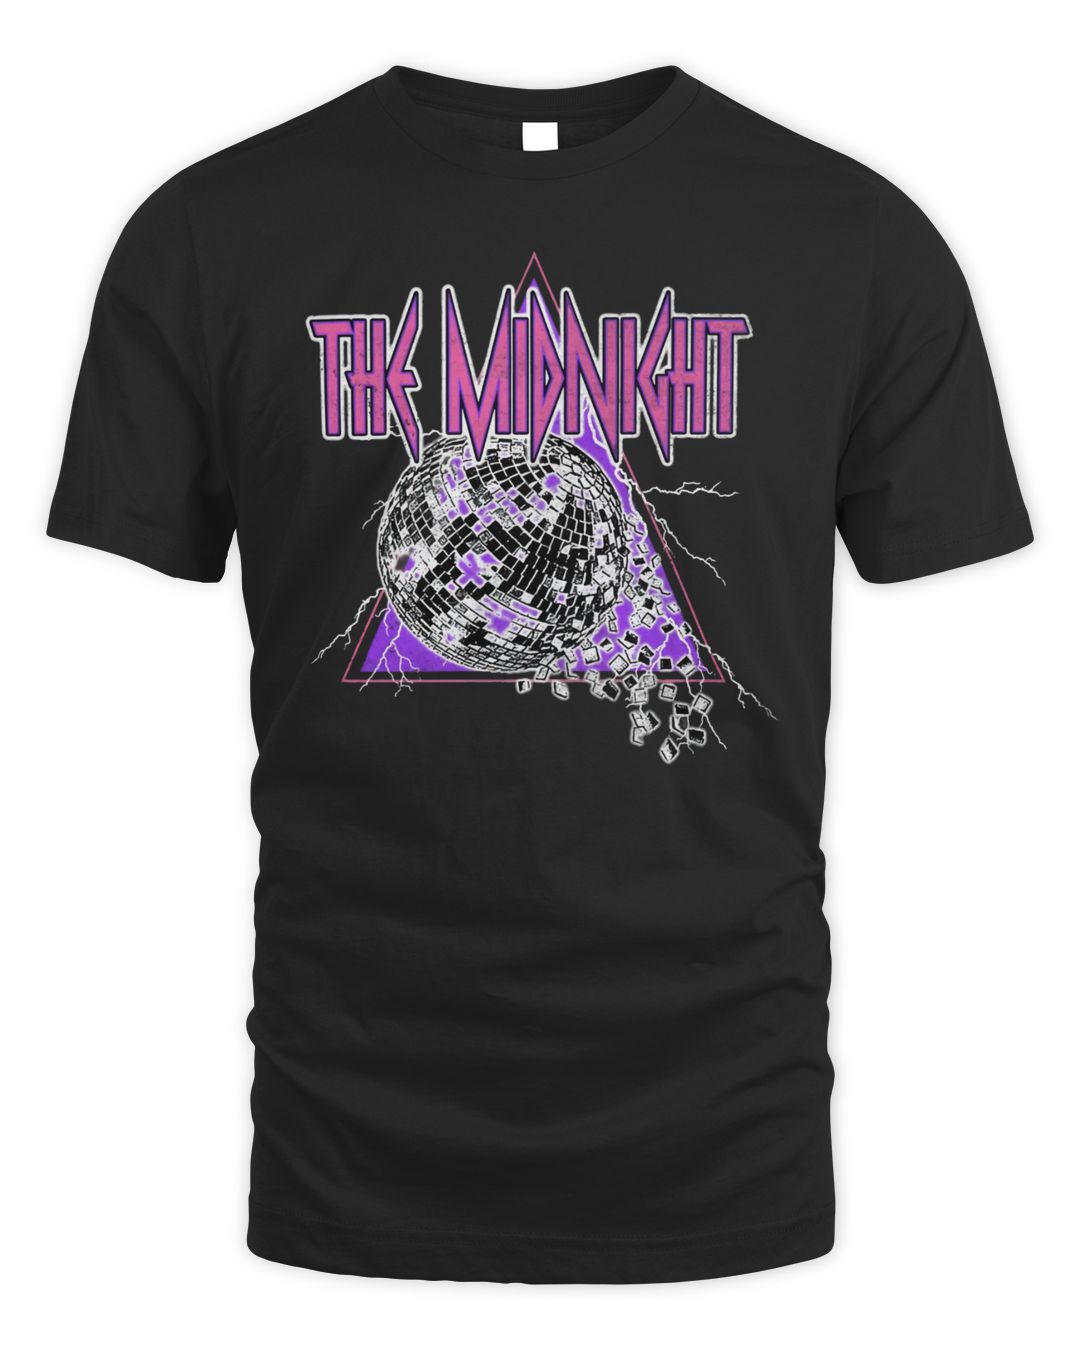 The Midnight Merch Disco Tour 2022 Shirt